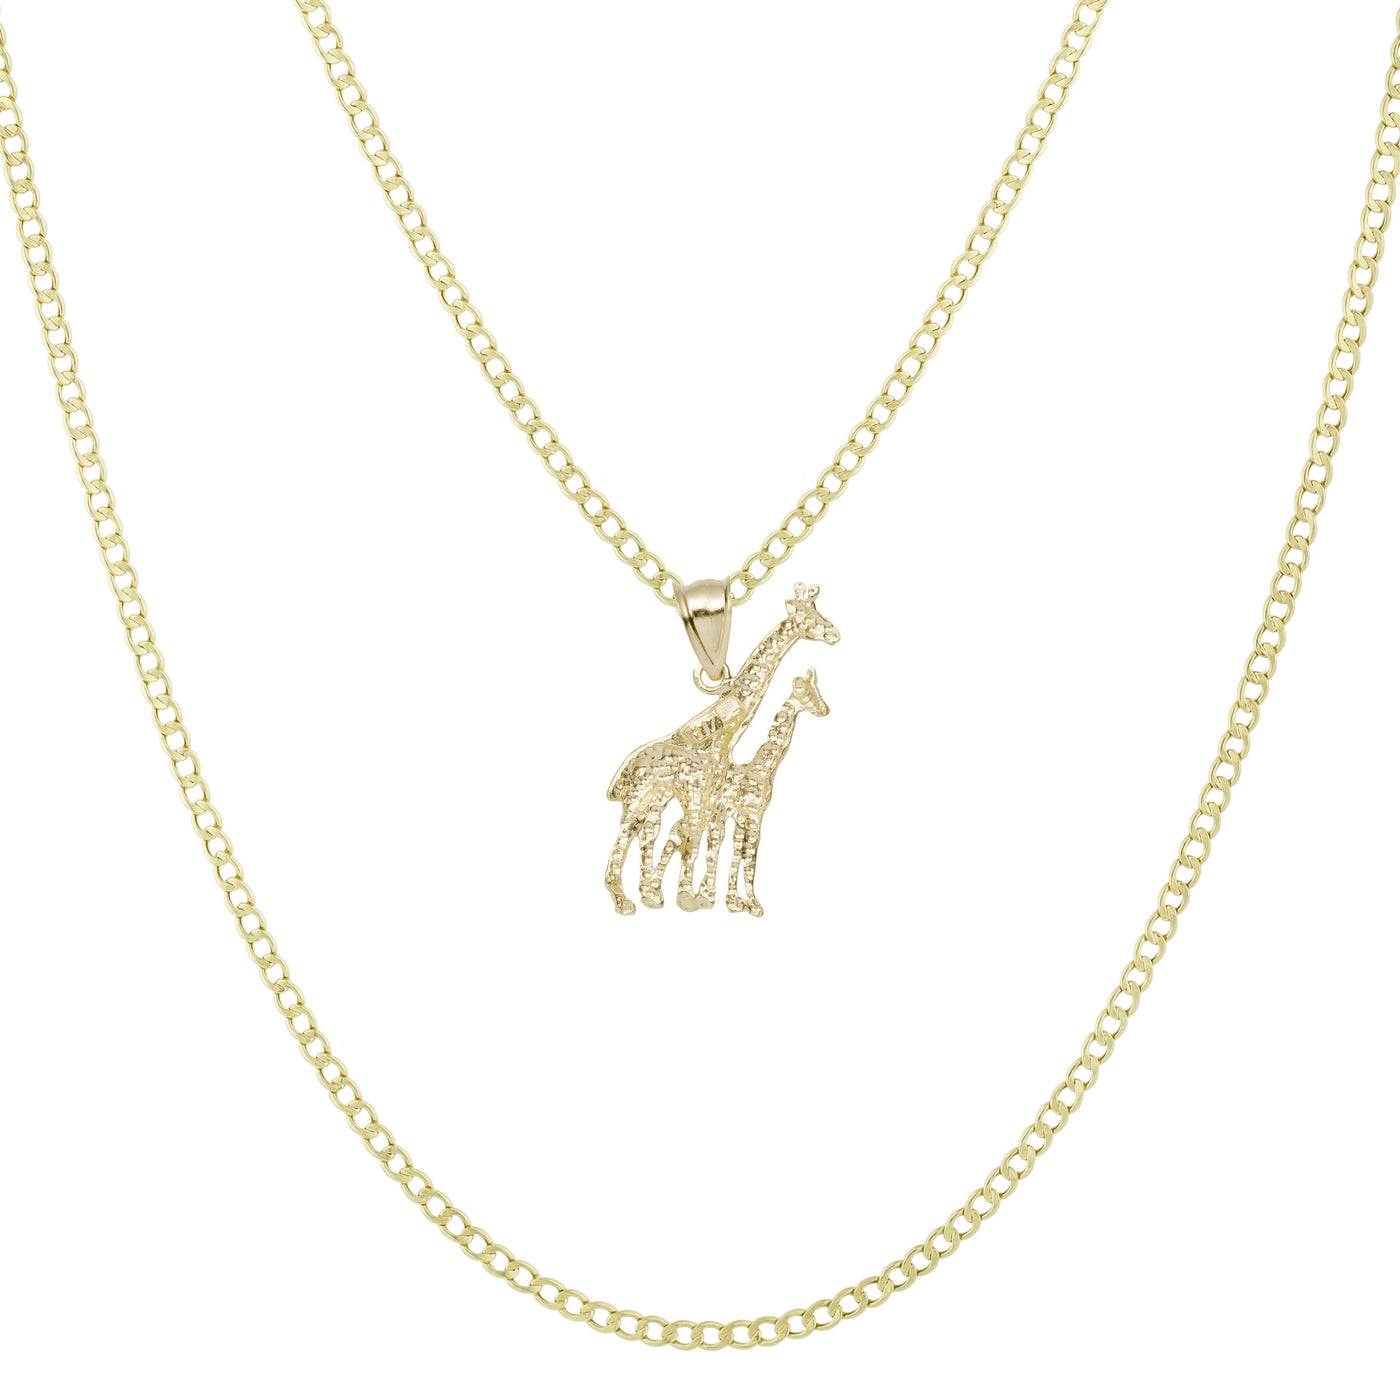 1 1/4" Diamond Cut Giraffe Pendant & Chain Necklace Set 10K Yellow Gold